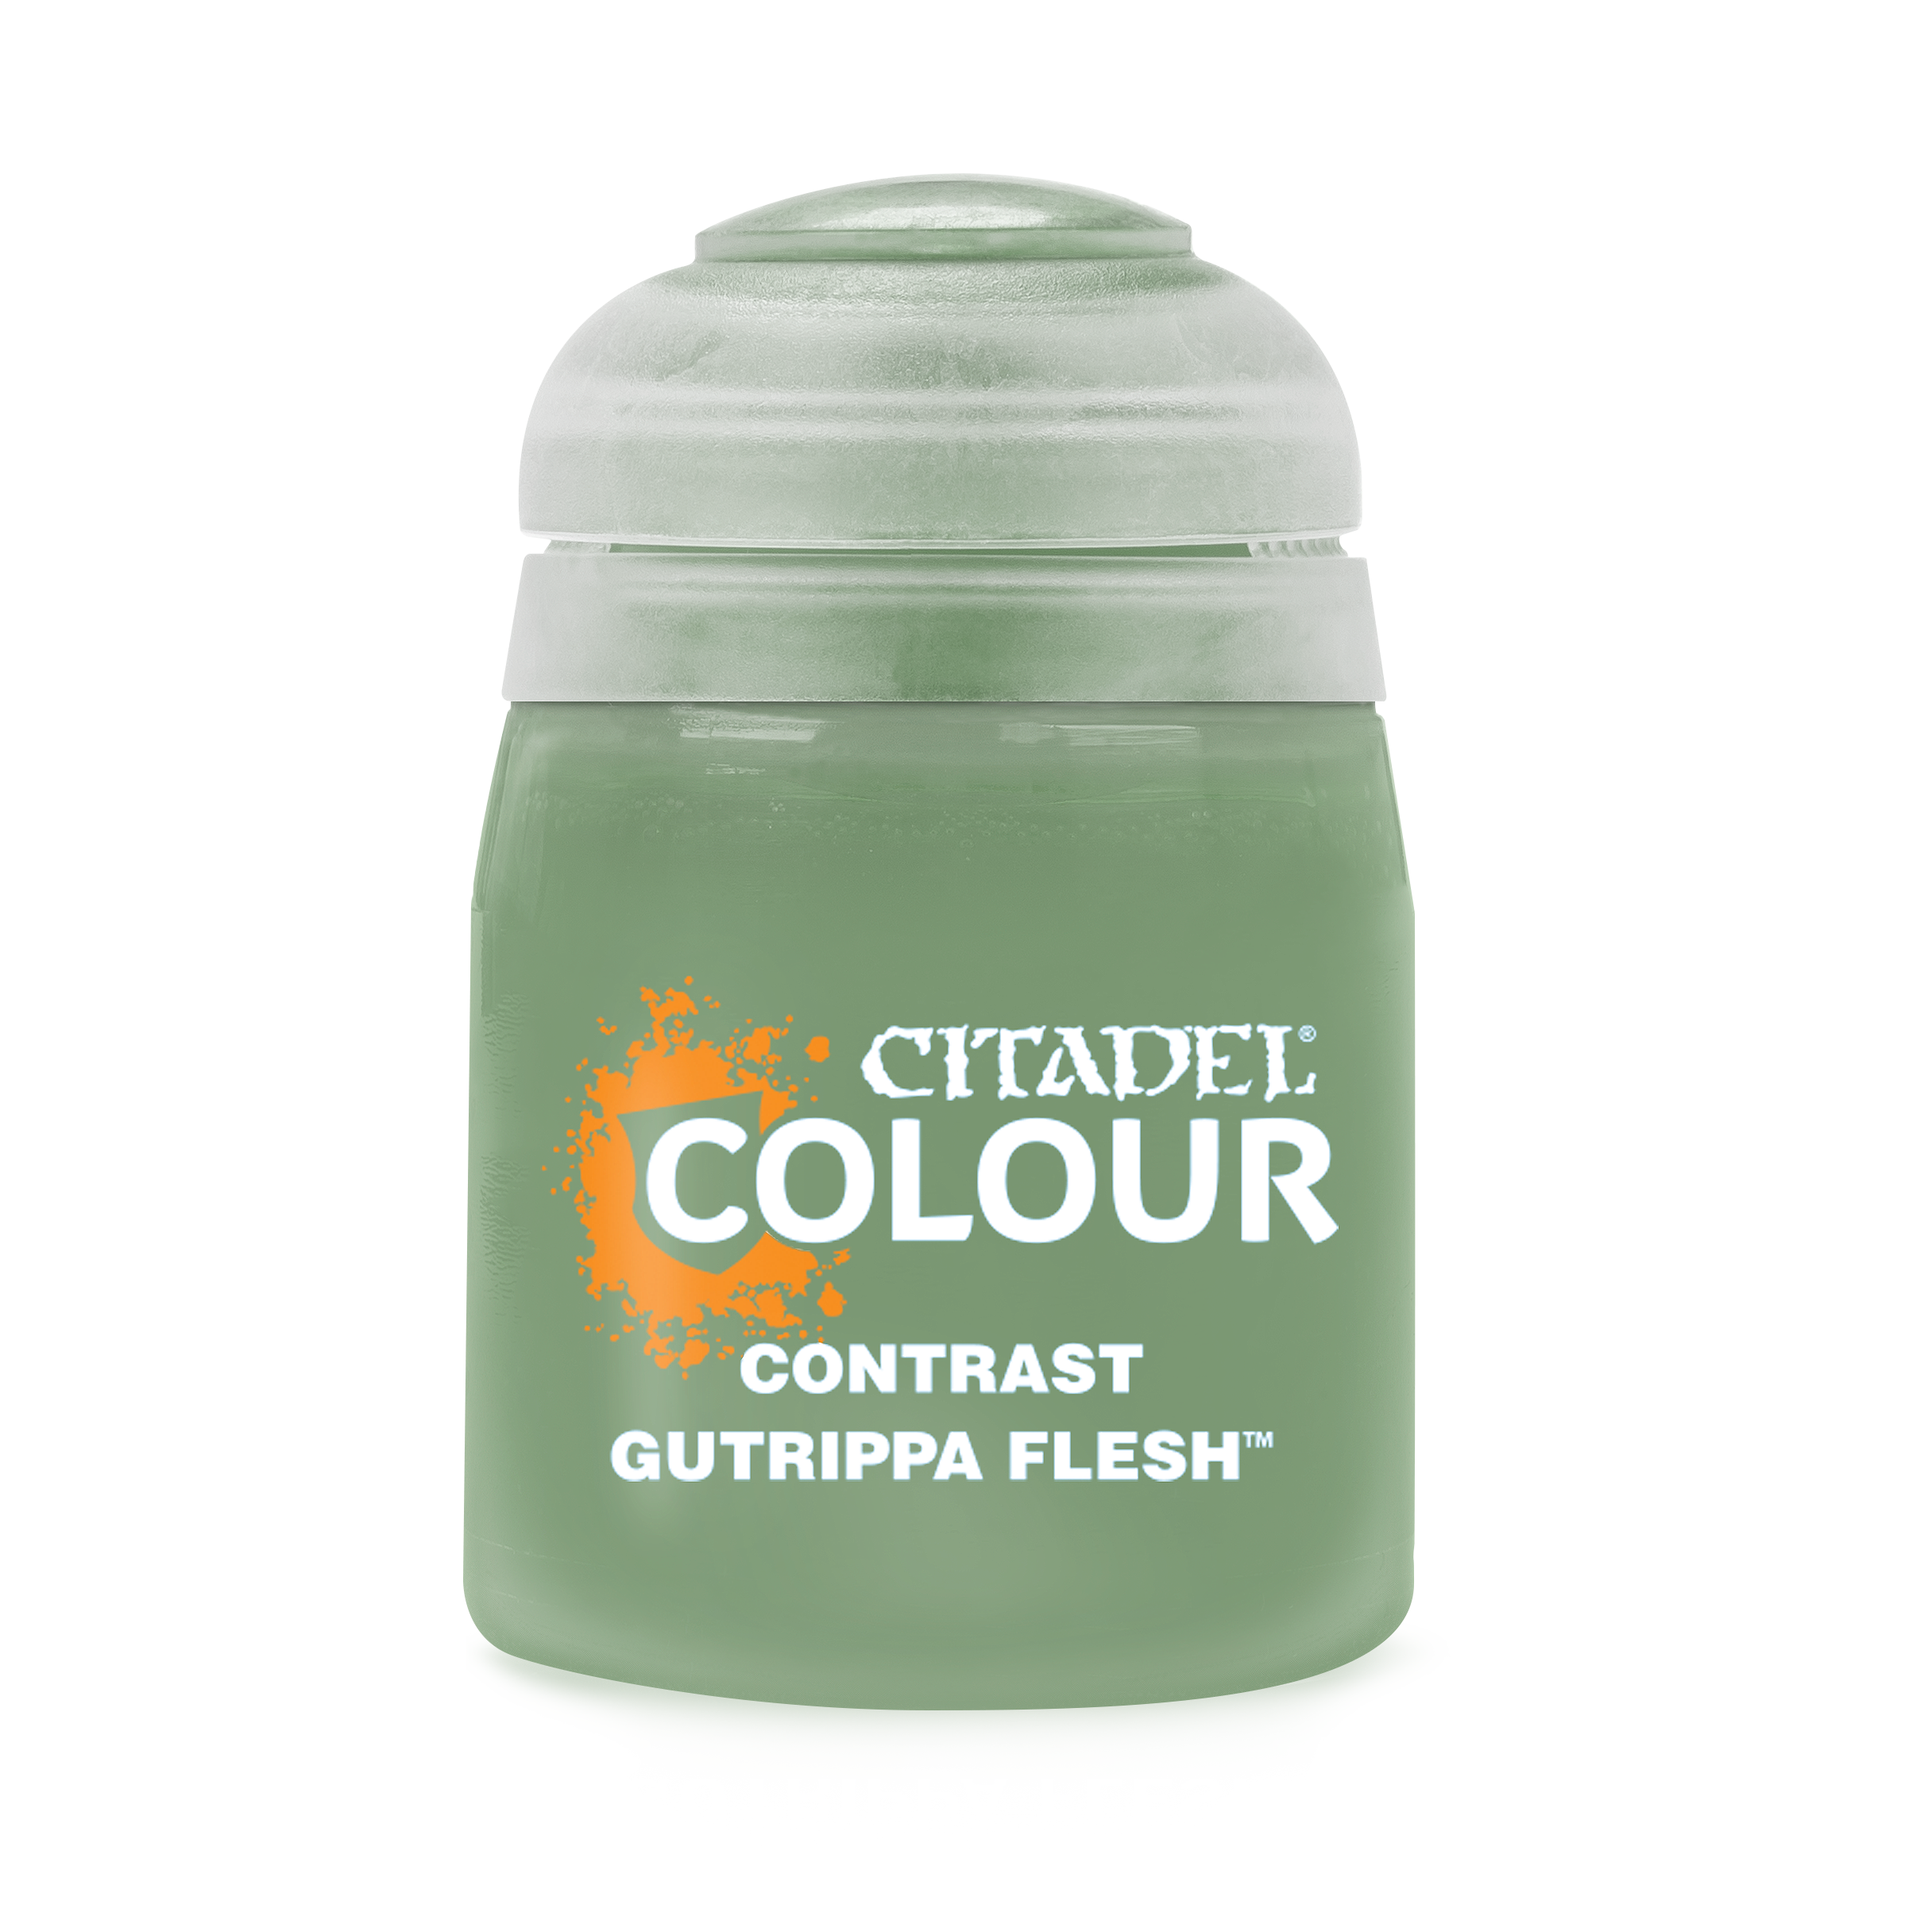 Gutrippa Flesh - Citadel Contrast Colour